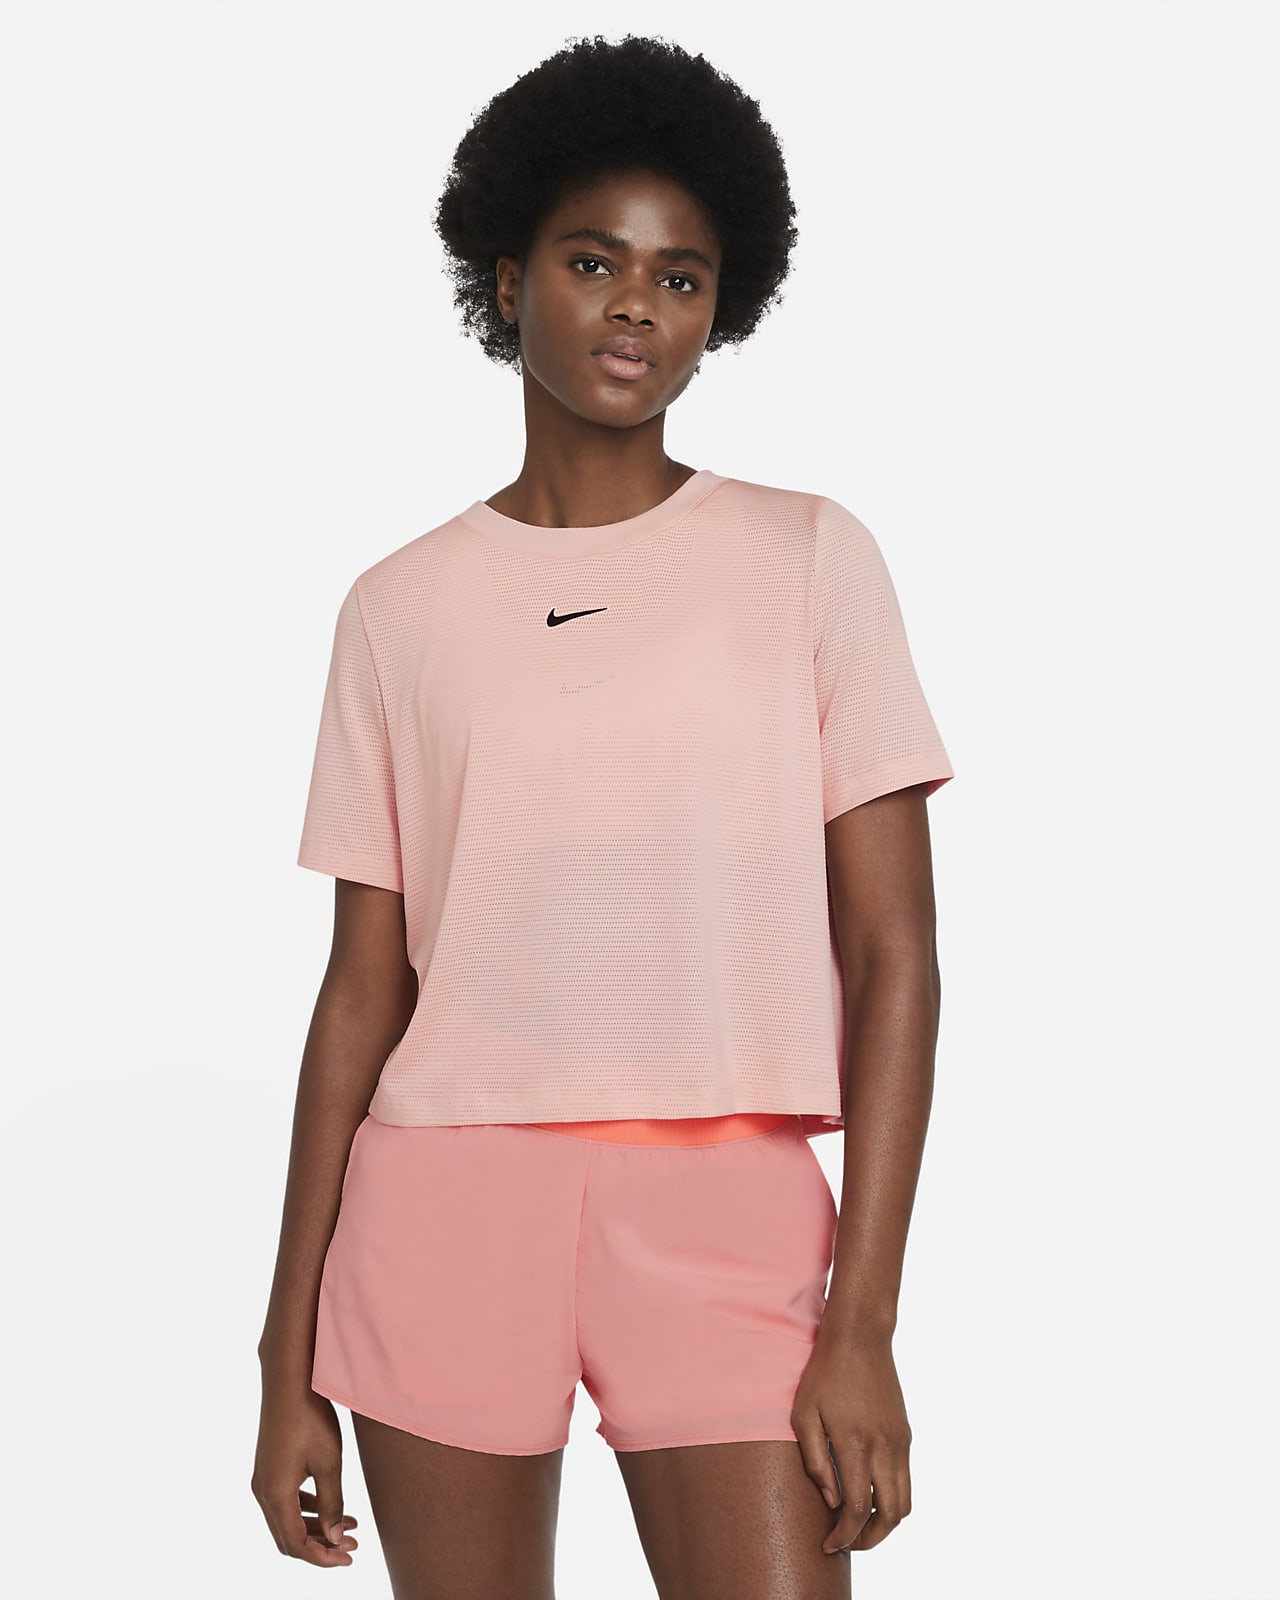 NikeCourt Advantage Women's Short-Sleeve Tennis Top. Nike MA